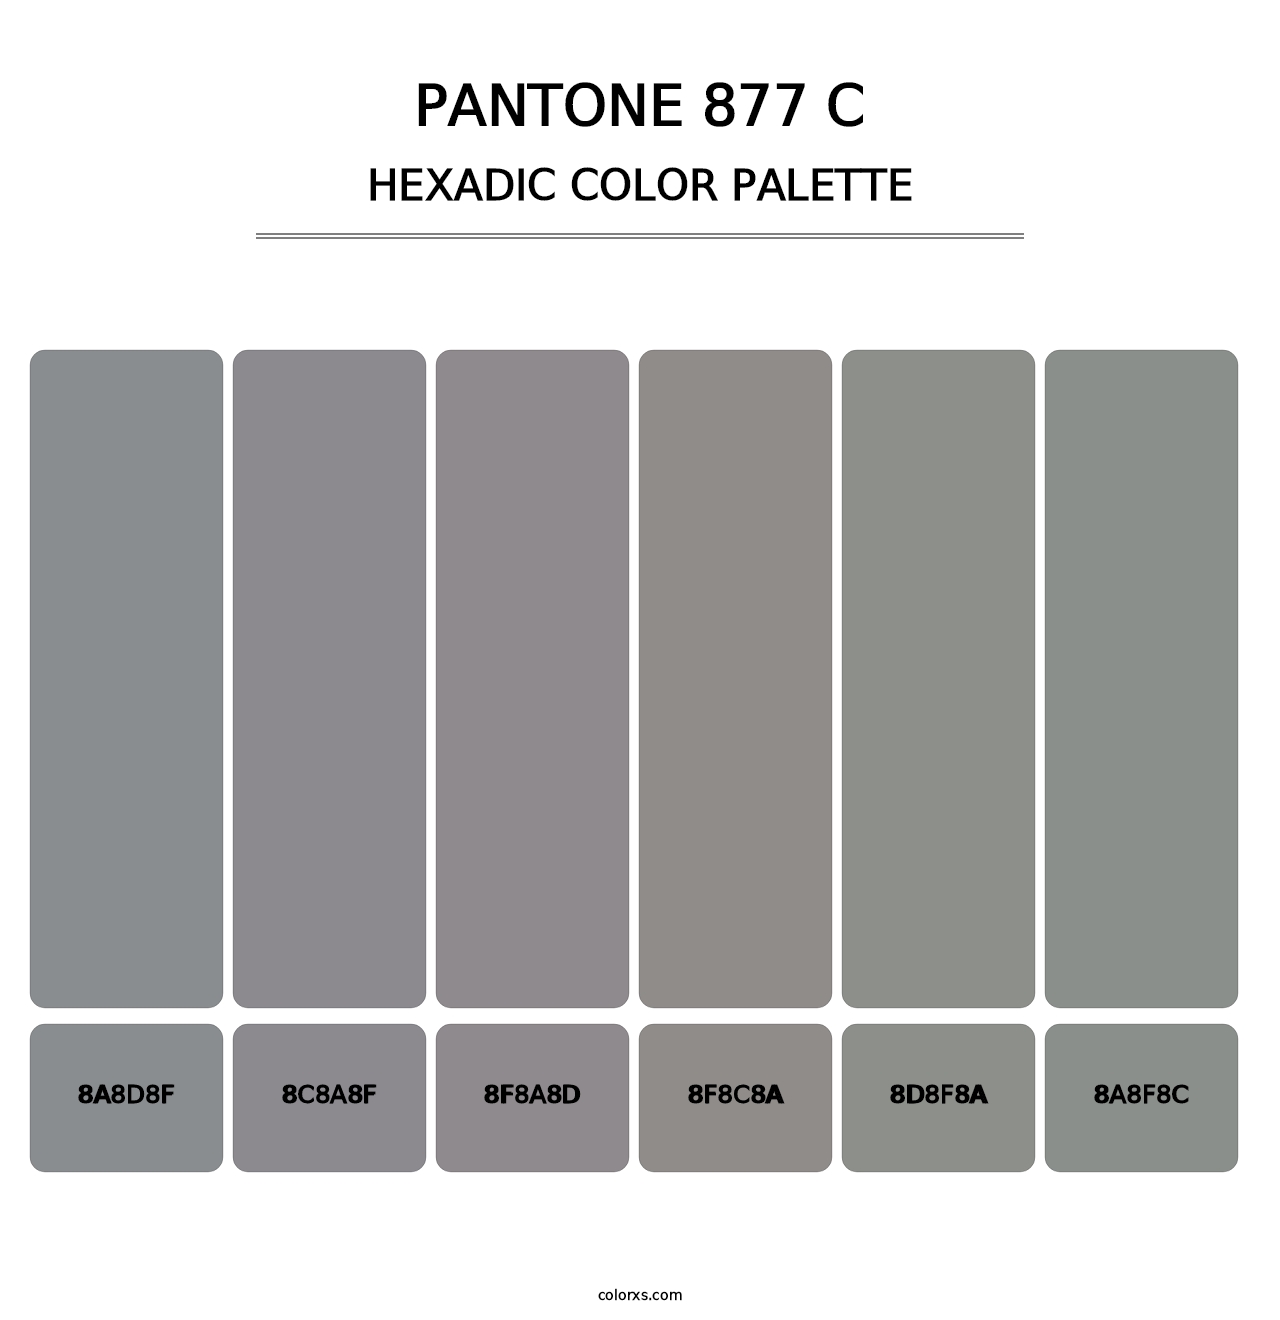 PANTONE 877 C - Hexadic Color Palette